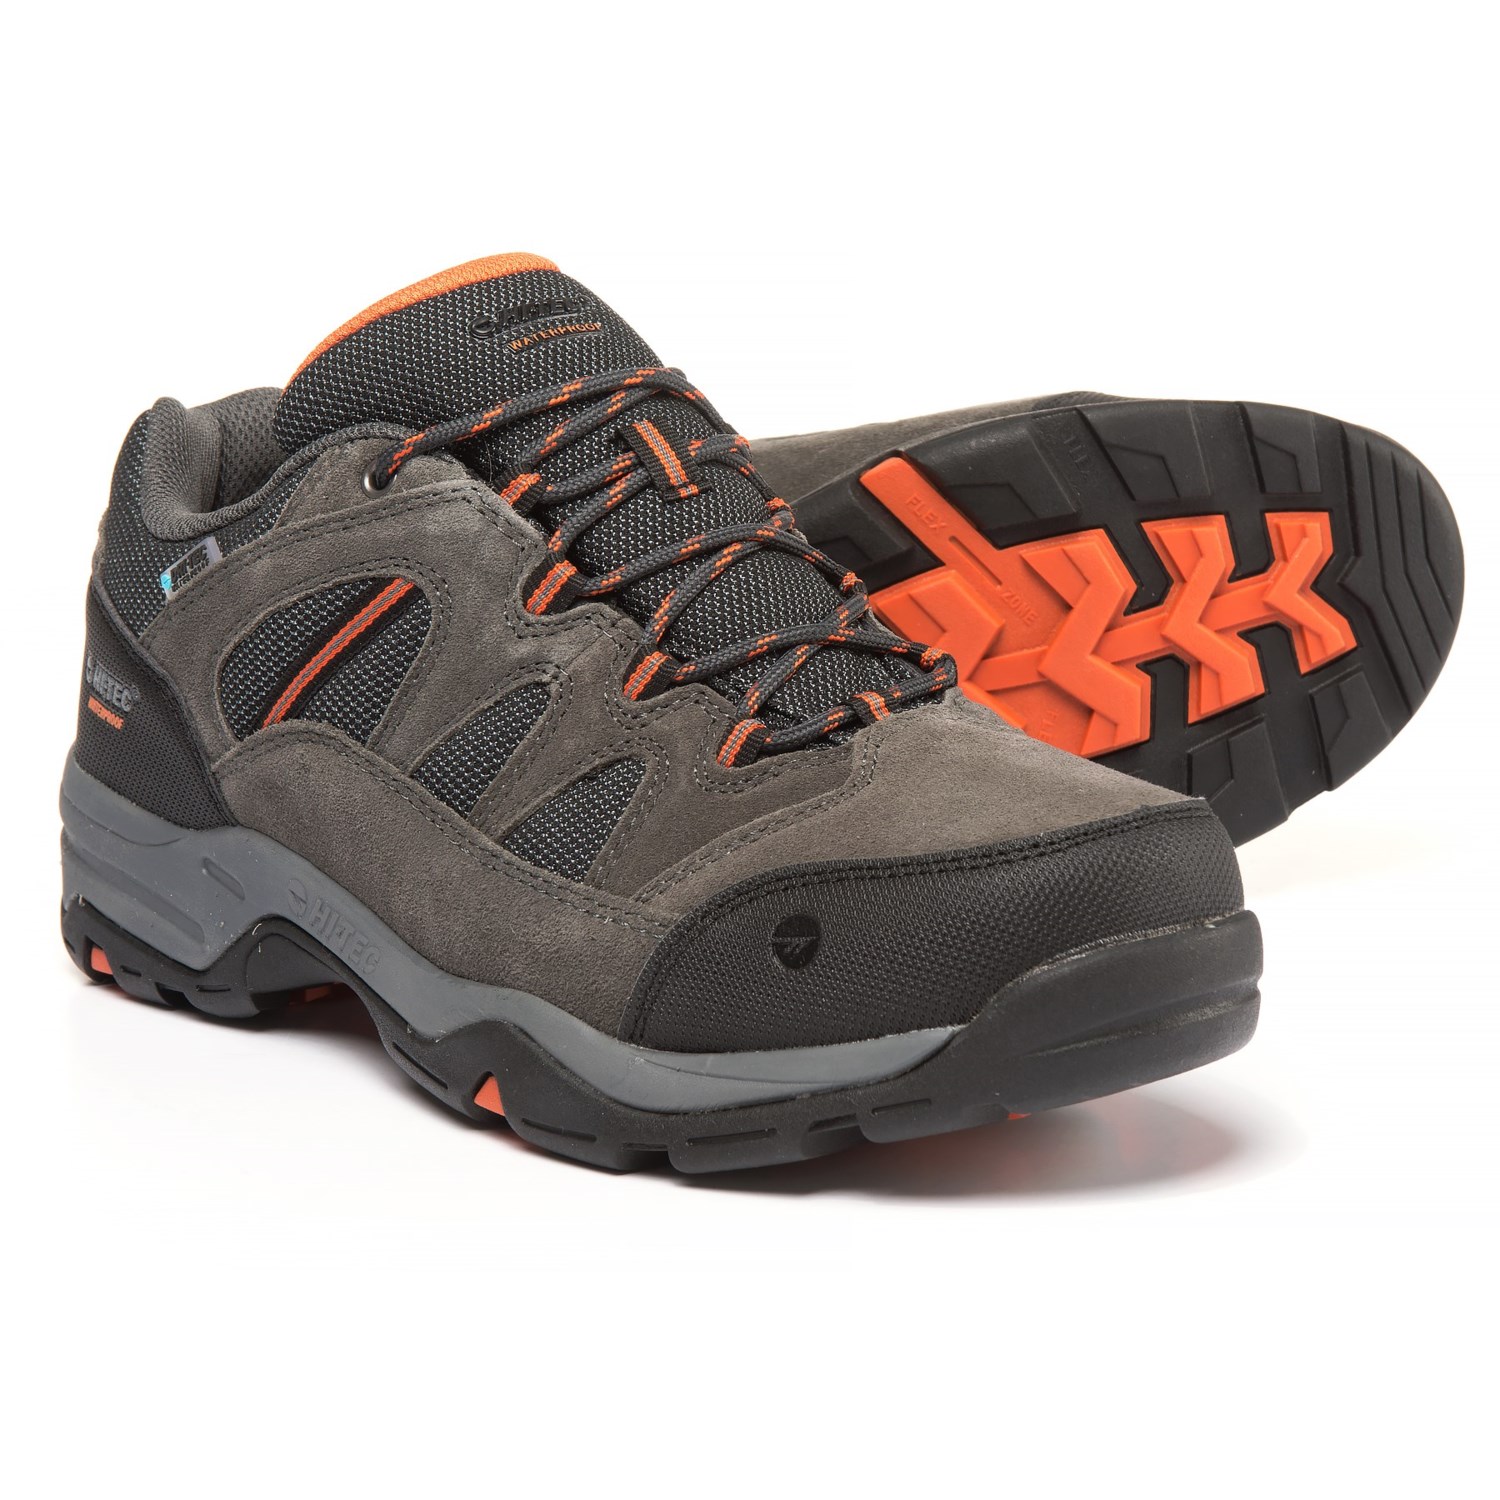 Hi-Tec Bandera II Low Hiking Shoes (For Men) - Save 42%